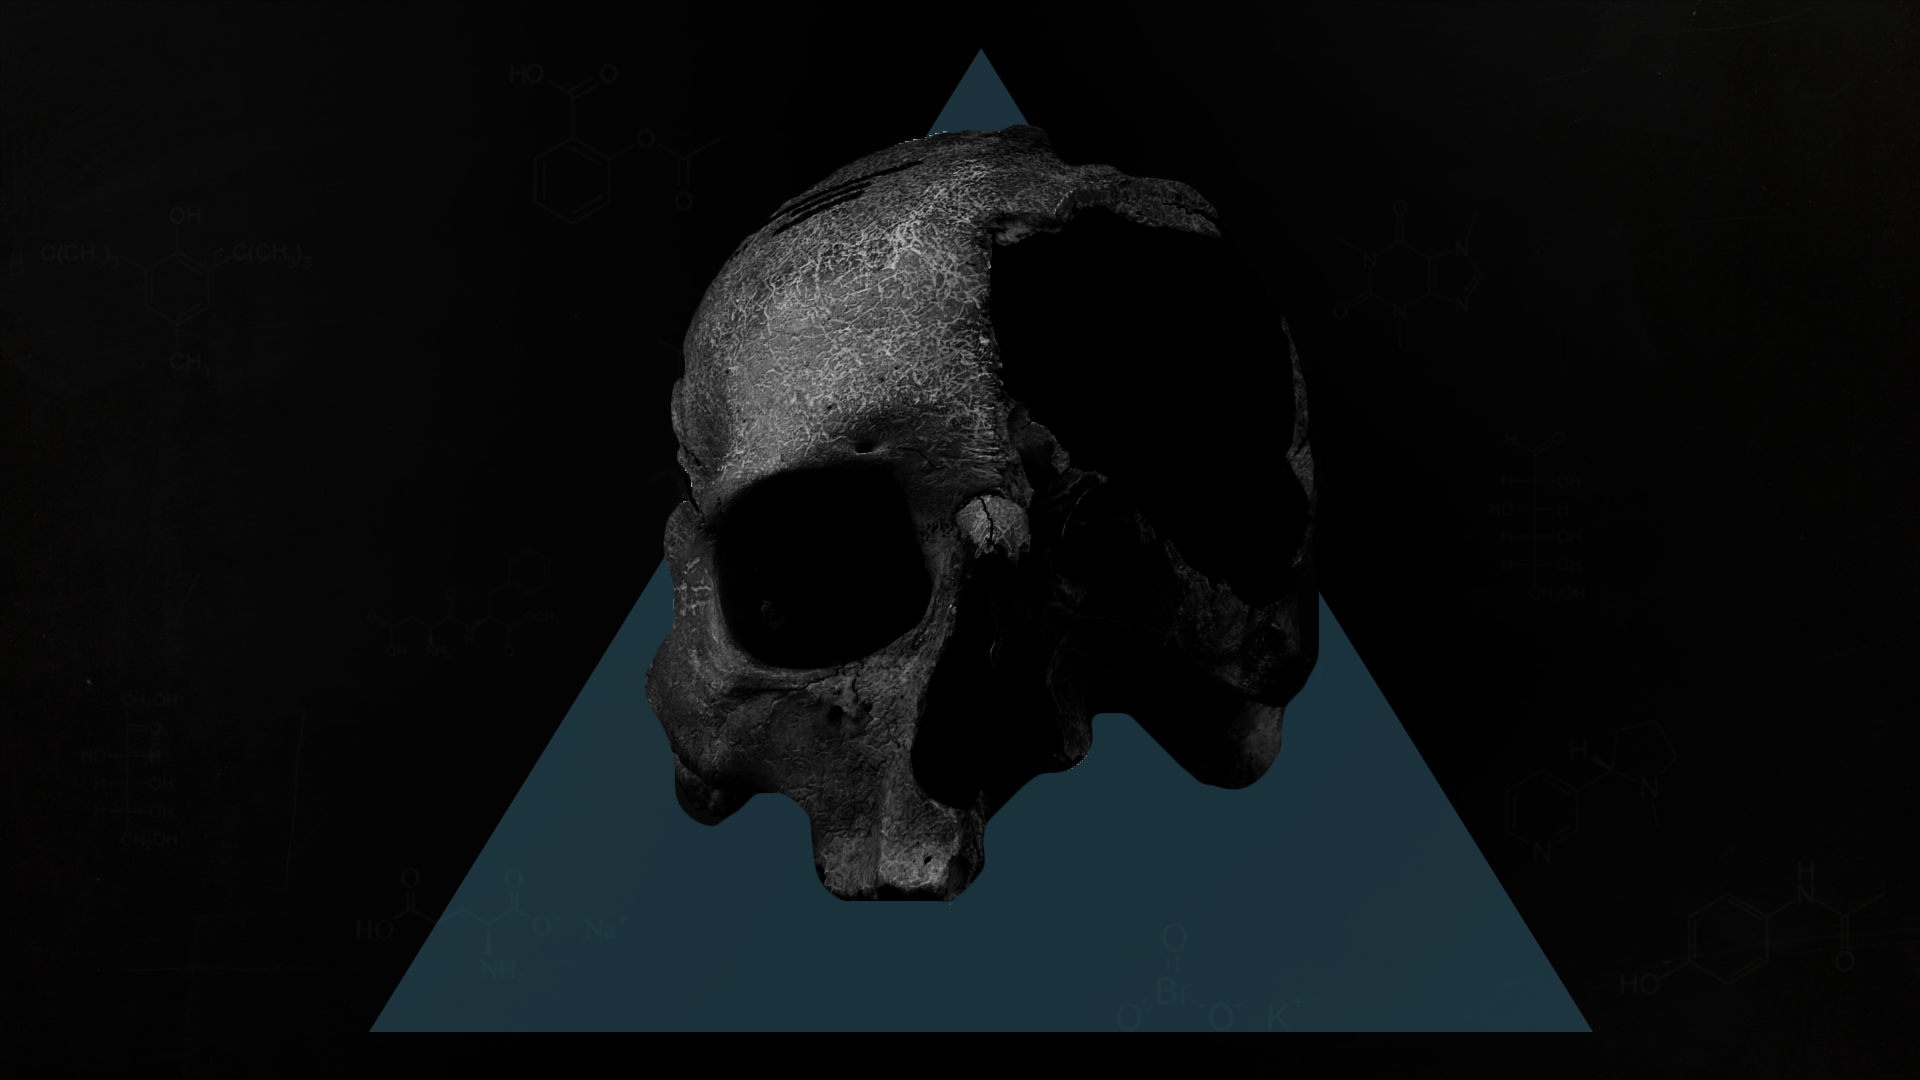 General 1920x1080 skull minimalism triangle simple background digital art dark background